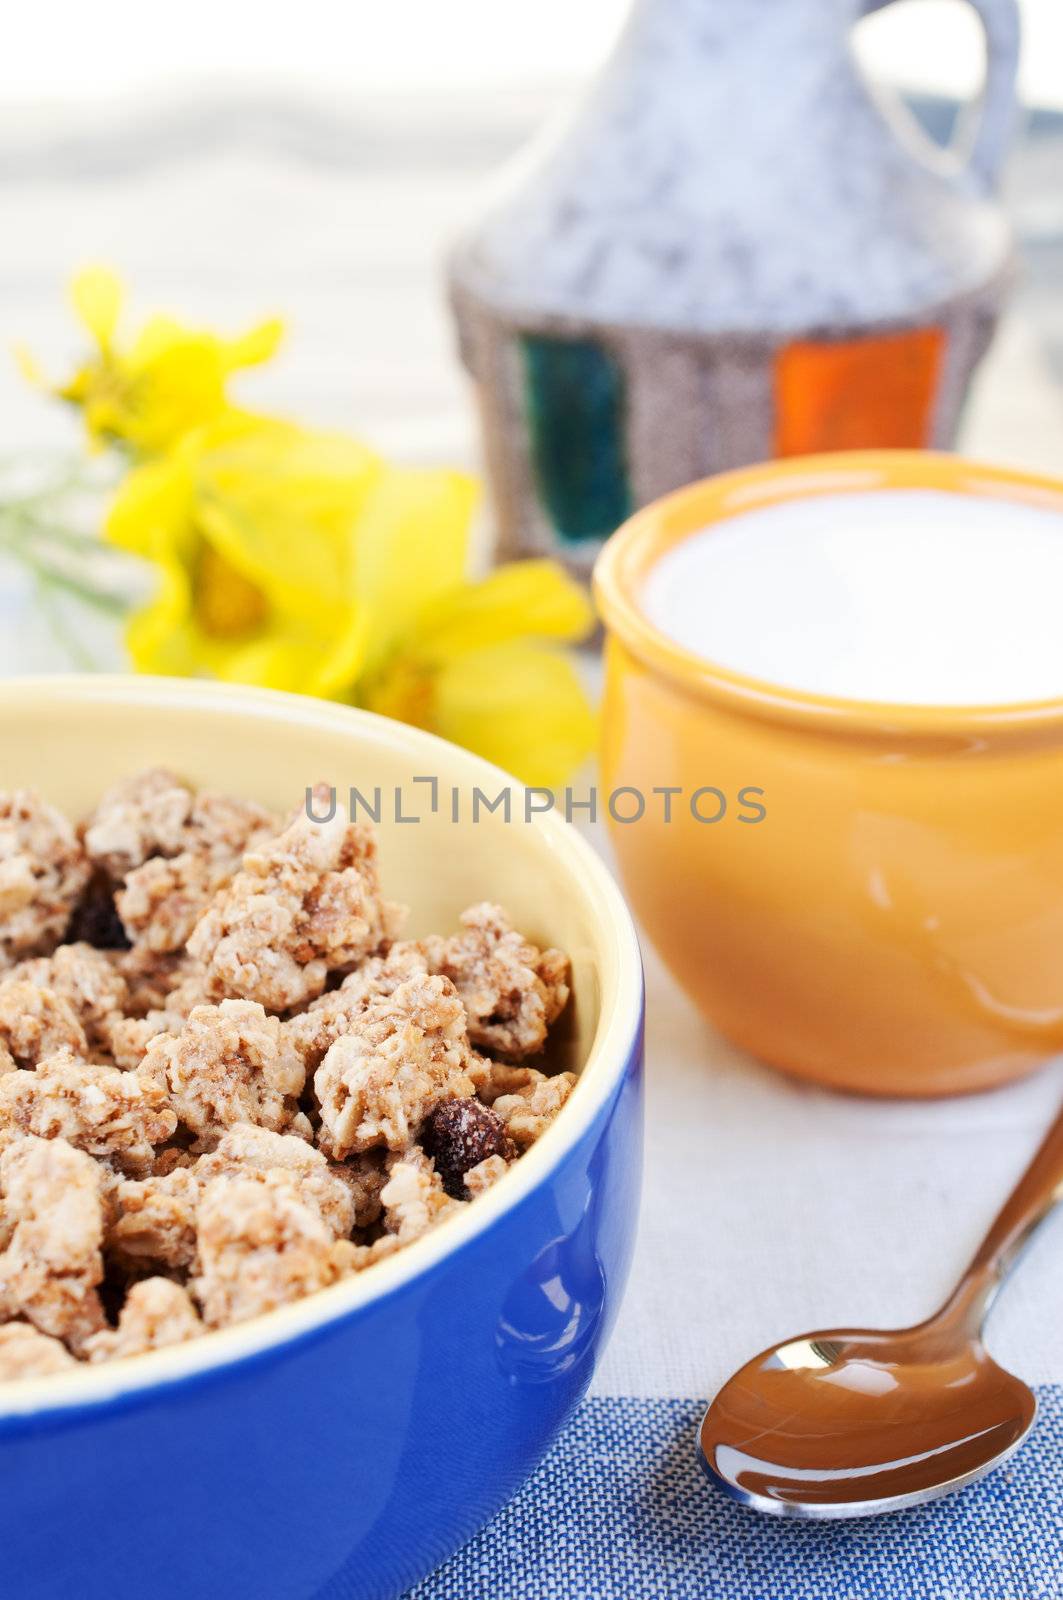 Muesli with raisins and milk